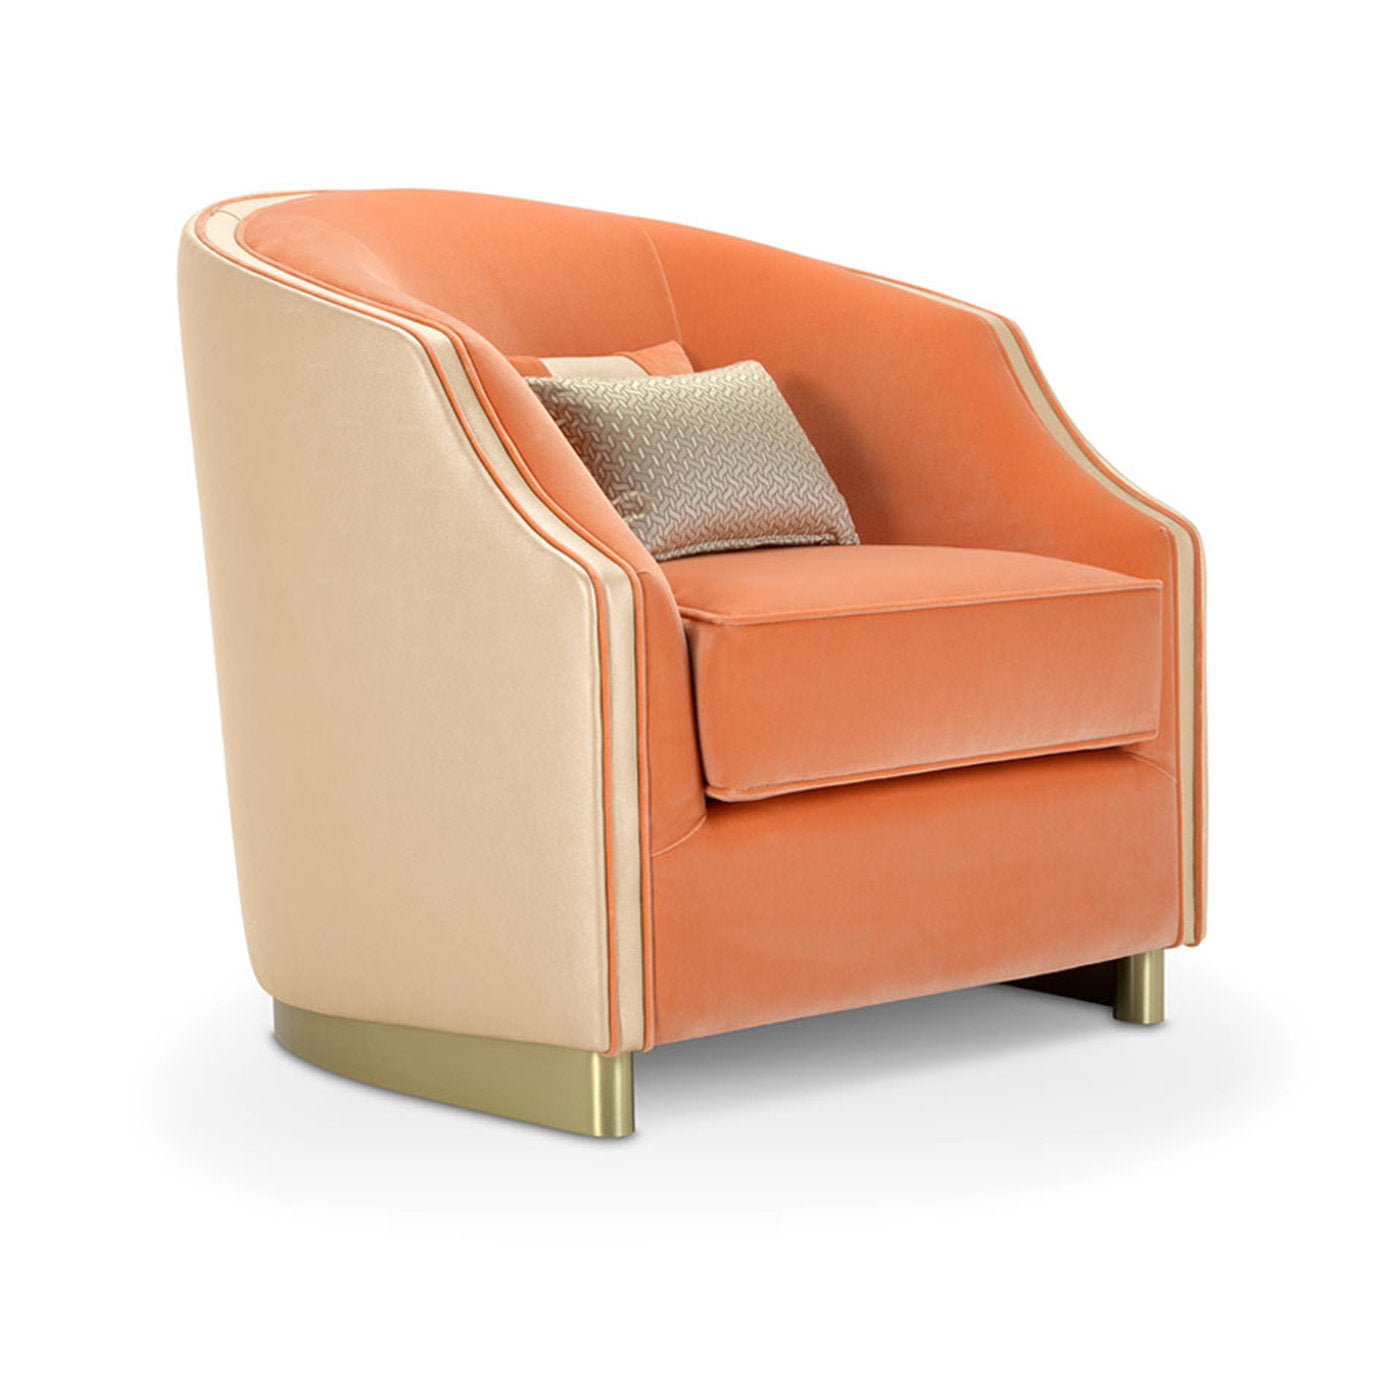 Cleio Small Orange Armchair - Alternative view 2